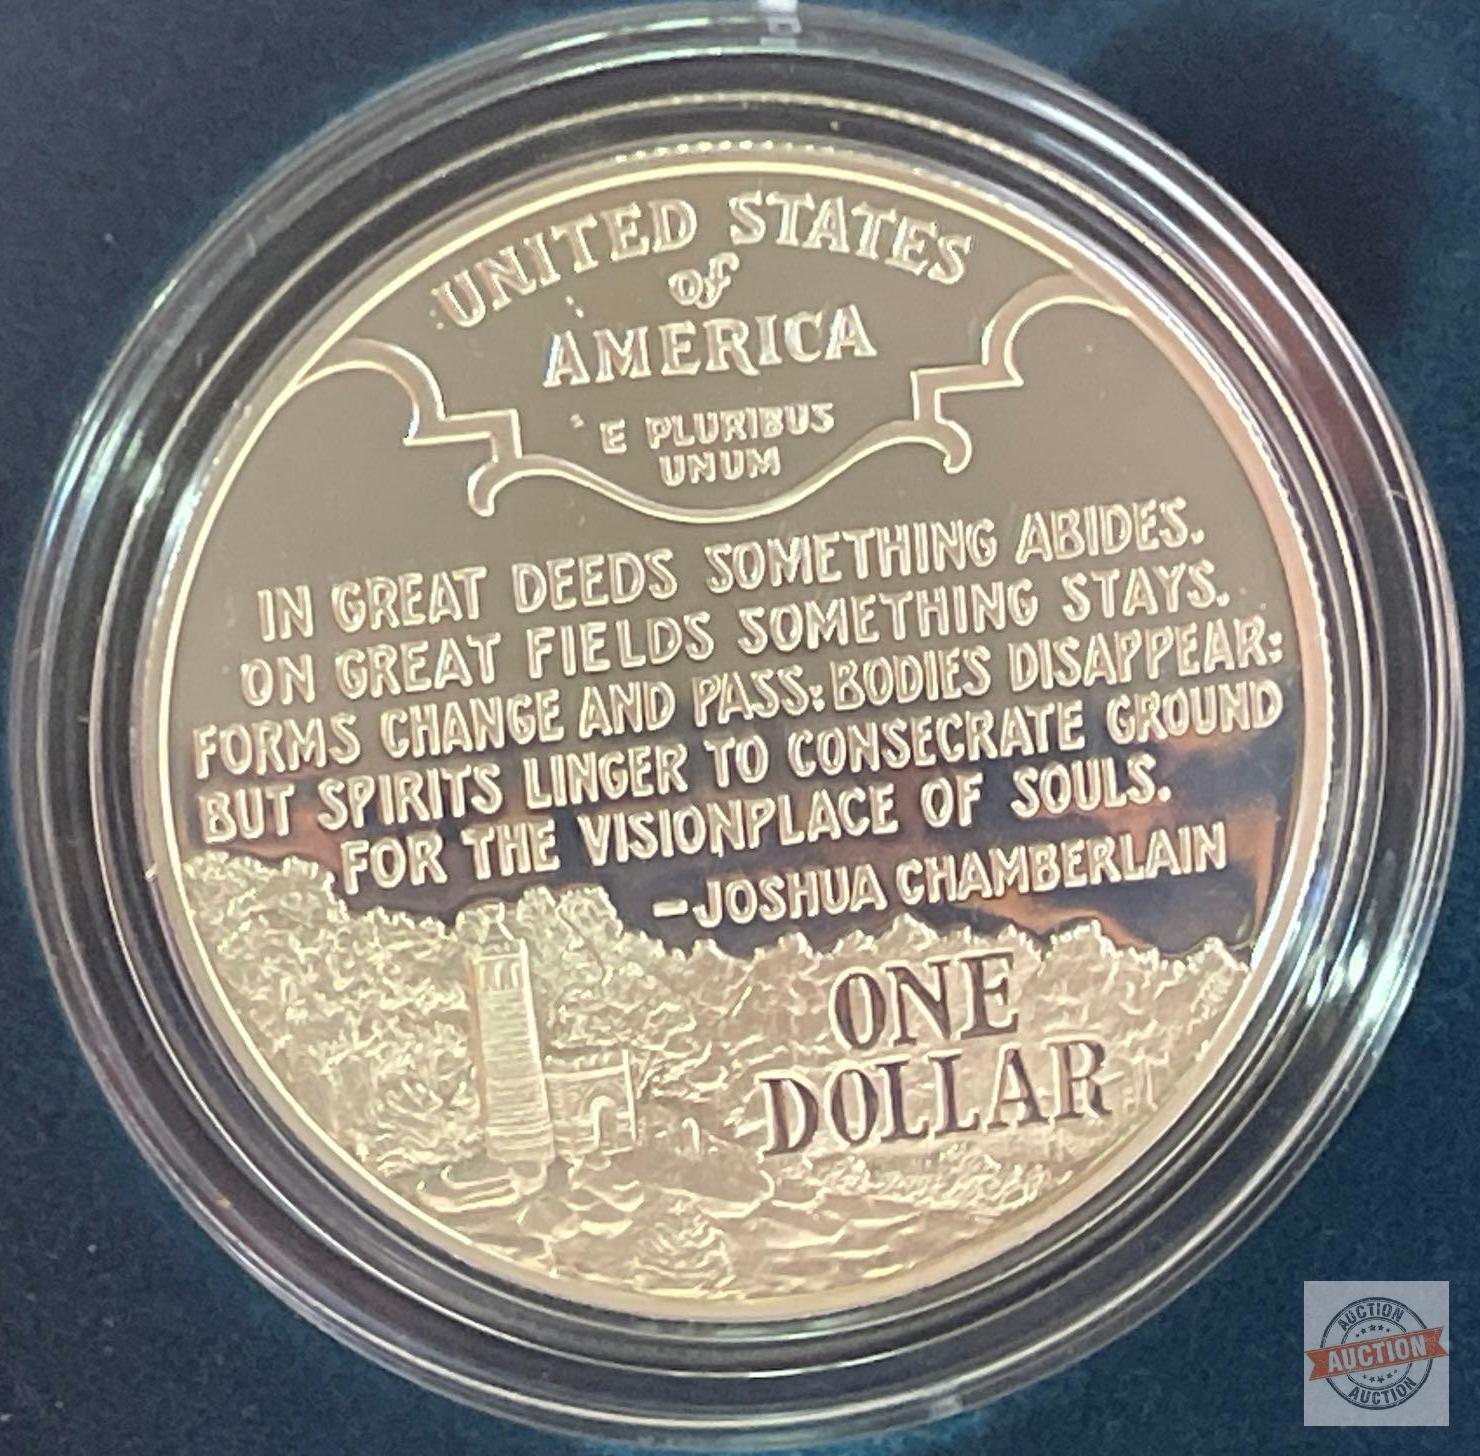 Silver Dollar & Half-dollar in Case - 1995 Civil War Battlefield Commemorative Coins US Mint Proof